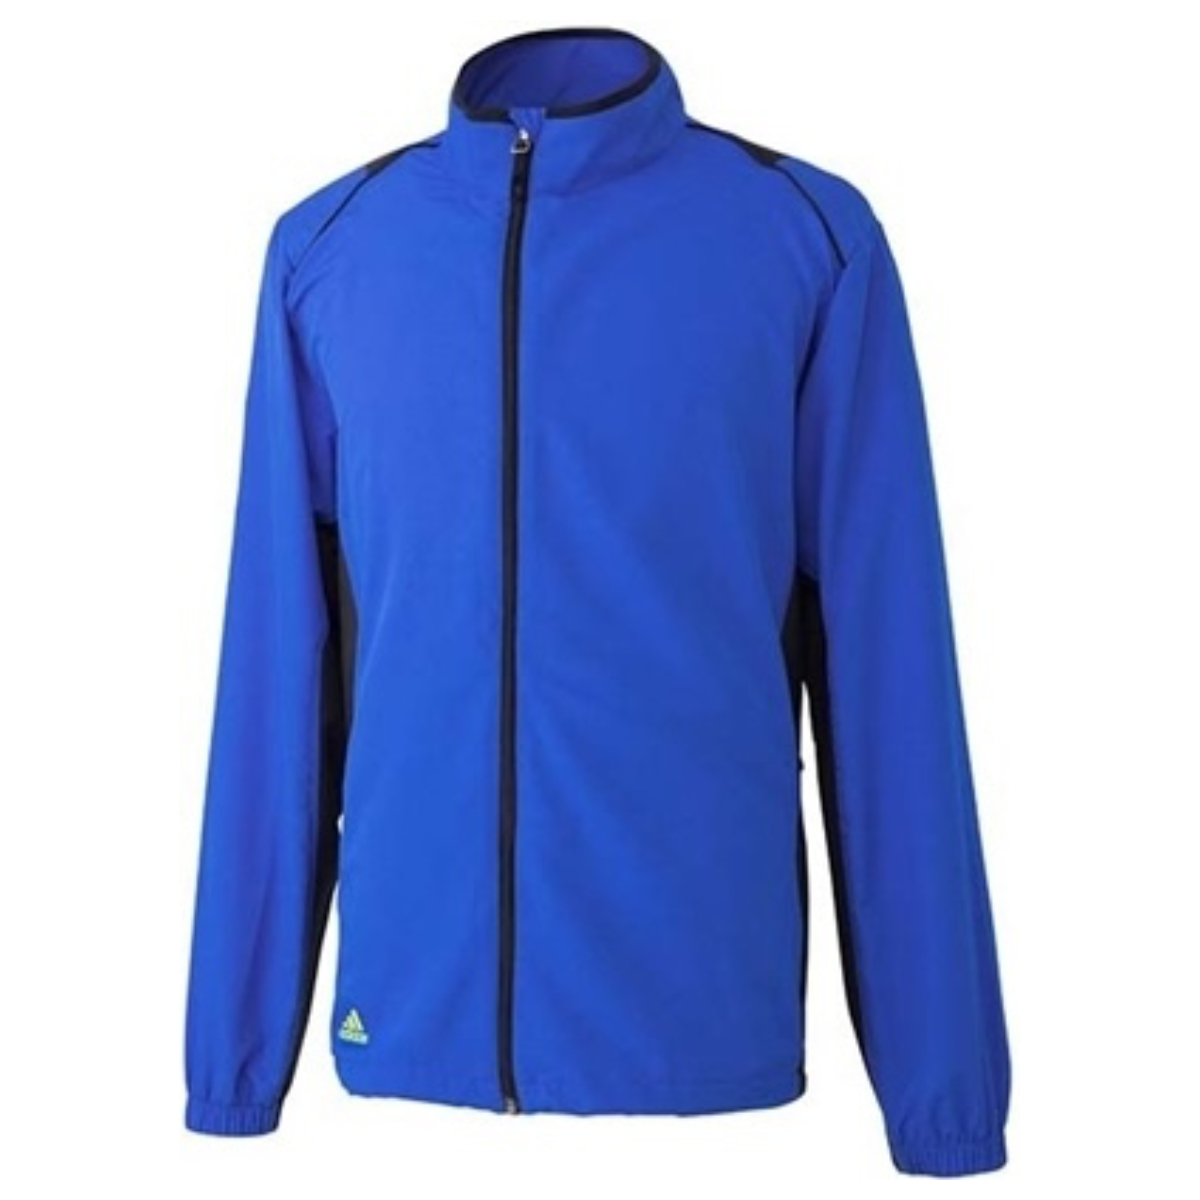 Adidas Climaproof 3-Stripe Jacke Blau